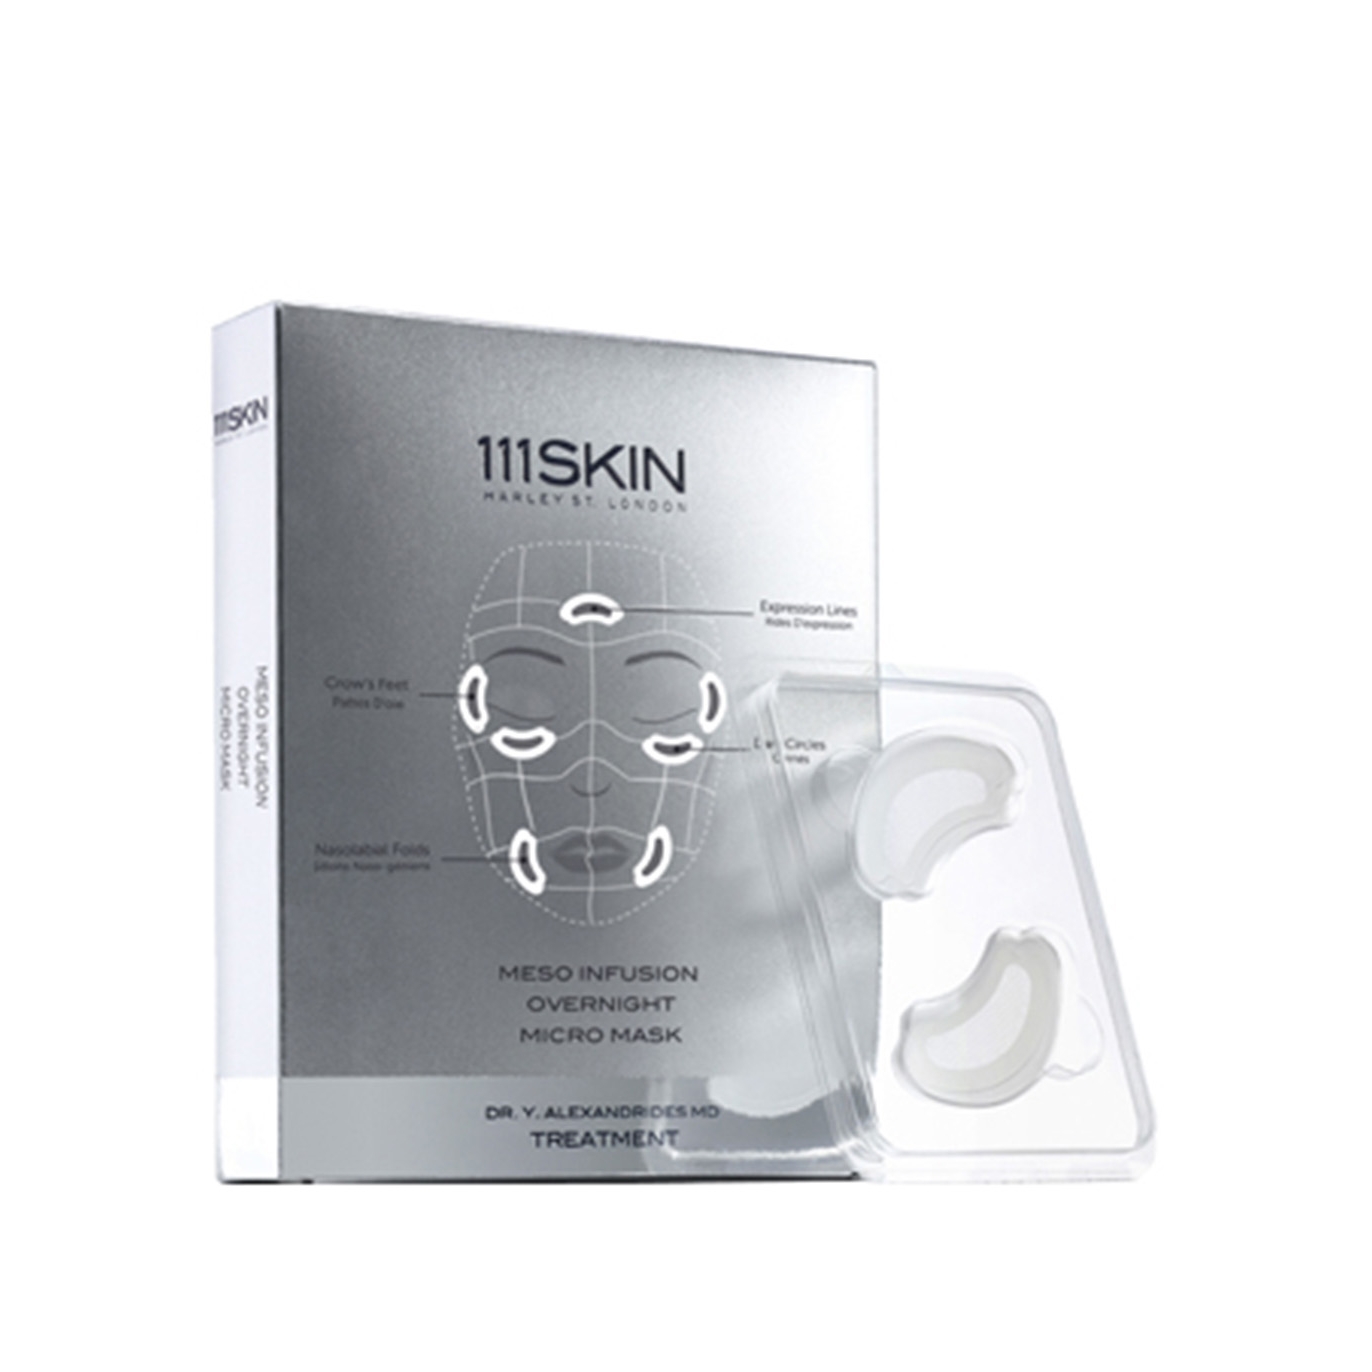 Meso Infusion Micro Mask 16g